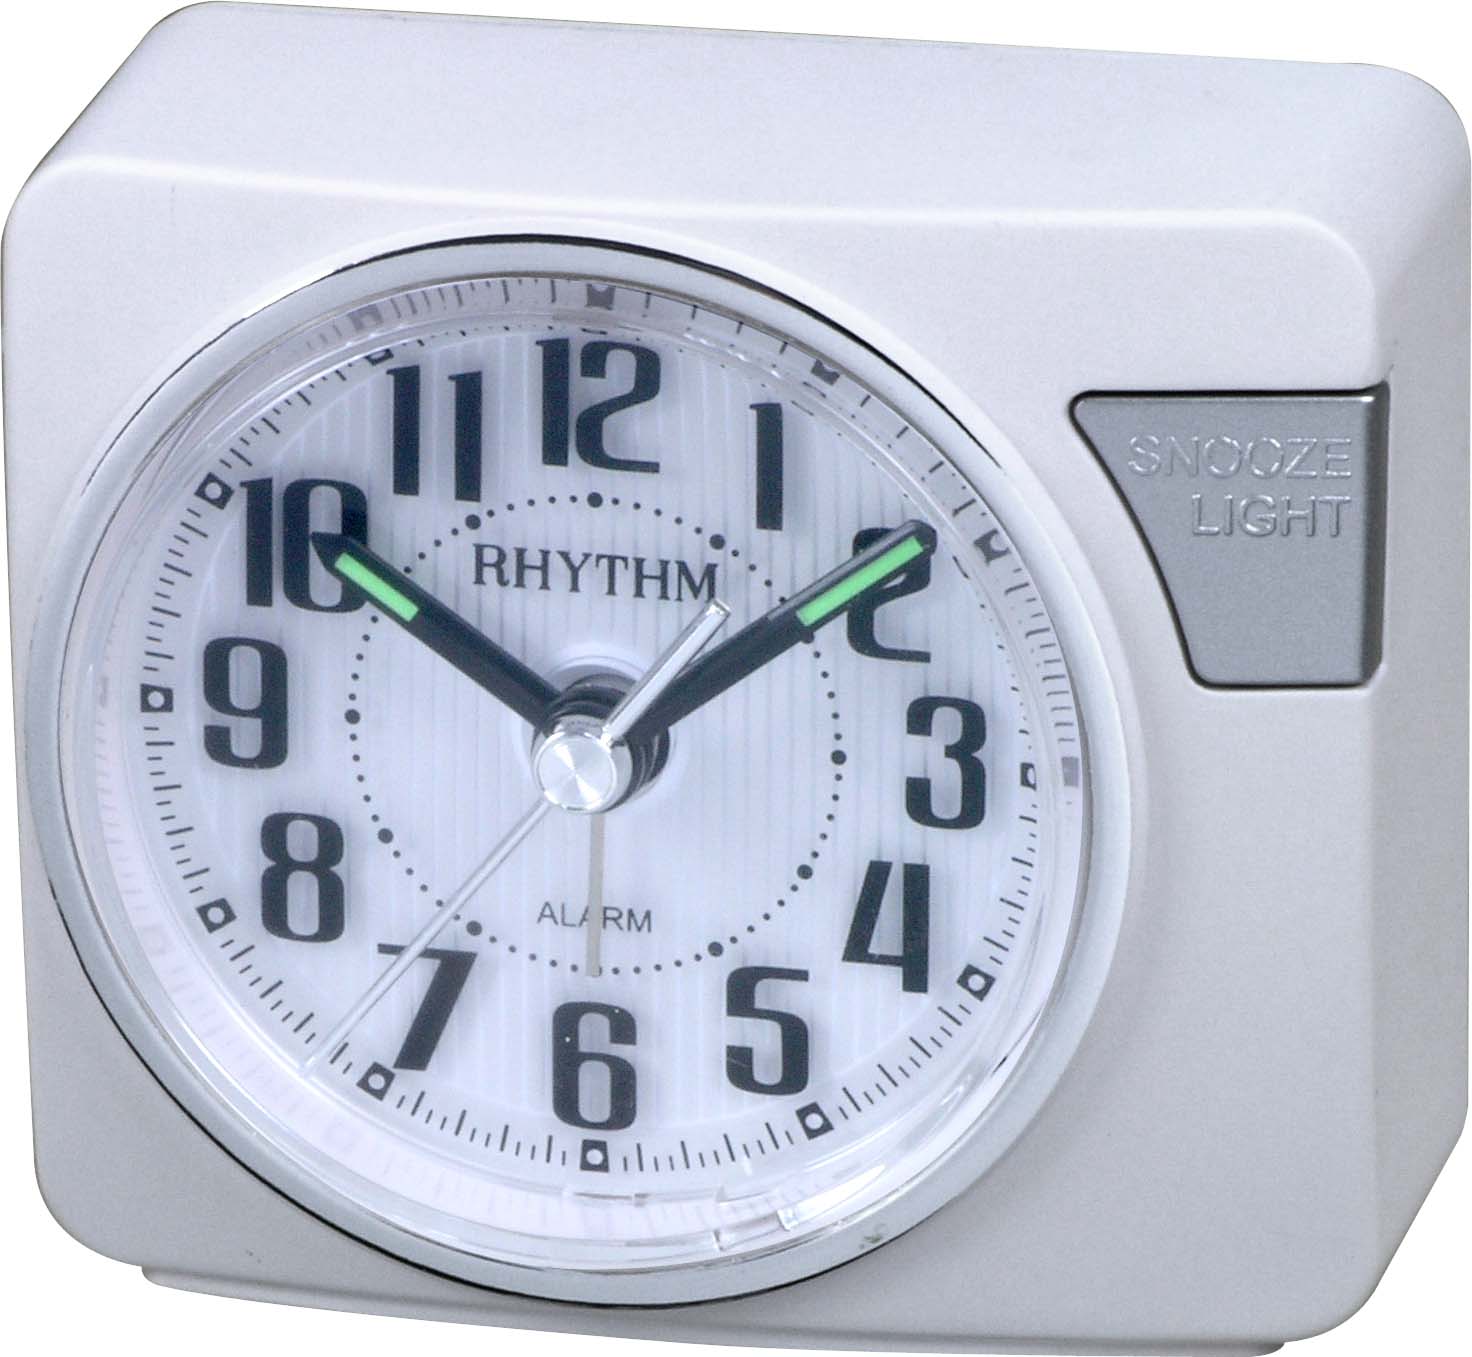 Rhythm alarm clock white CRE842NR03